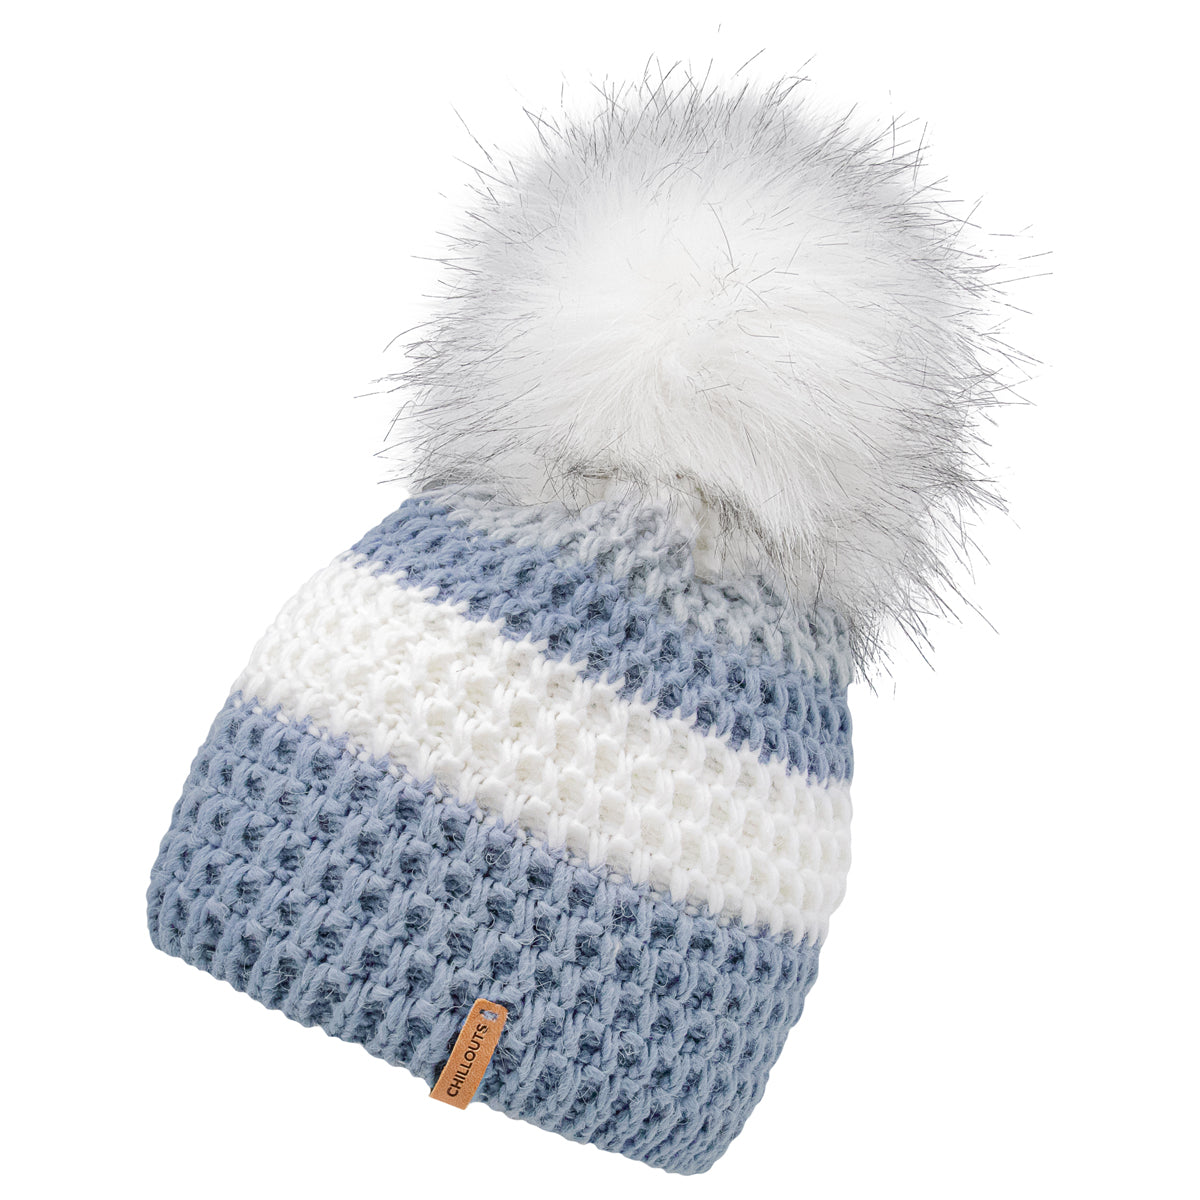 Bommelmütze - Sanfte Farben & abnehmbarer Bommel - jetzt kaufen! –  Chillouts Headwear